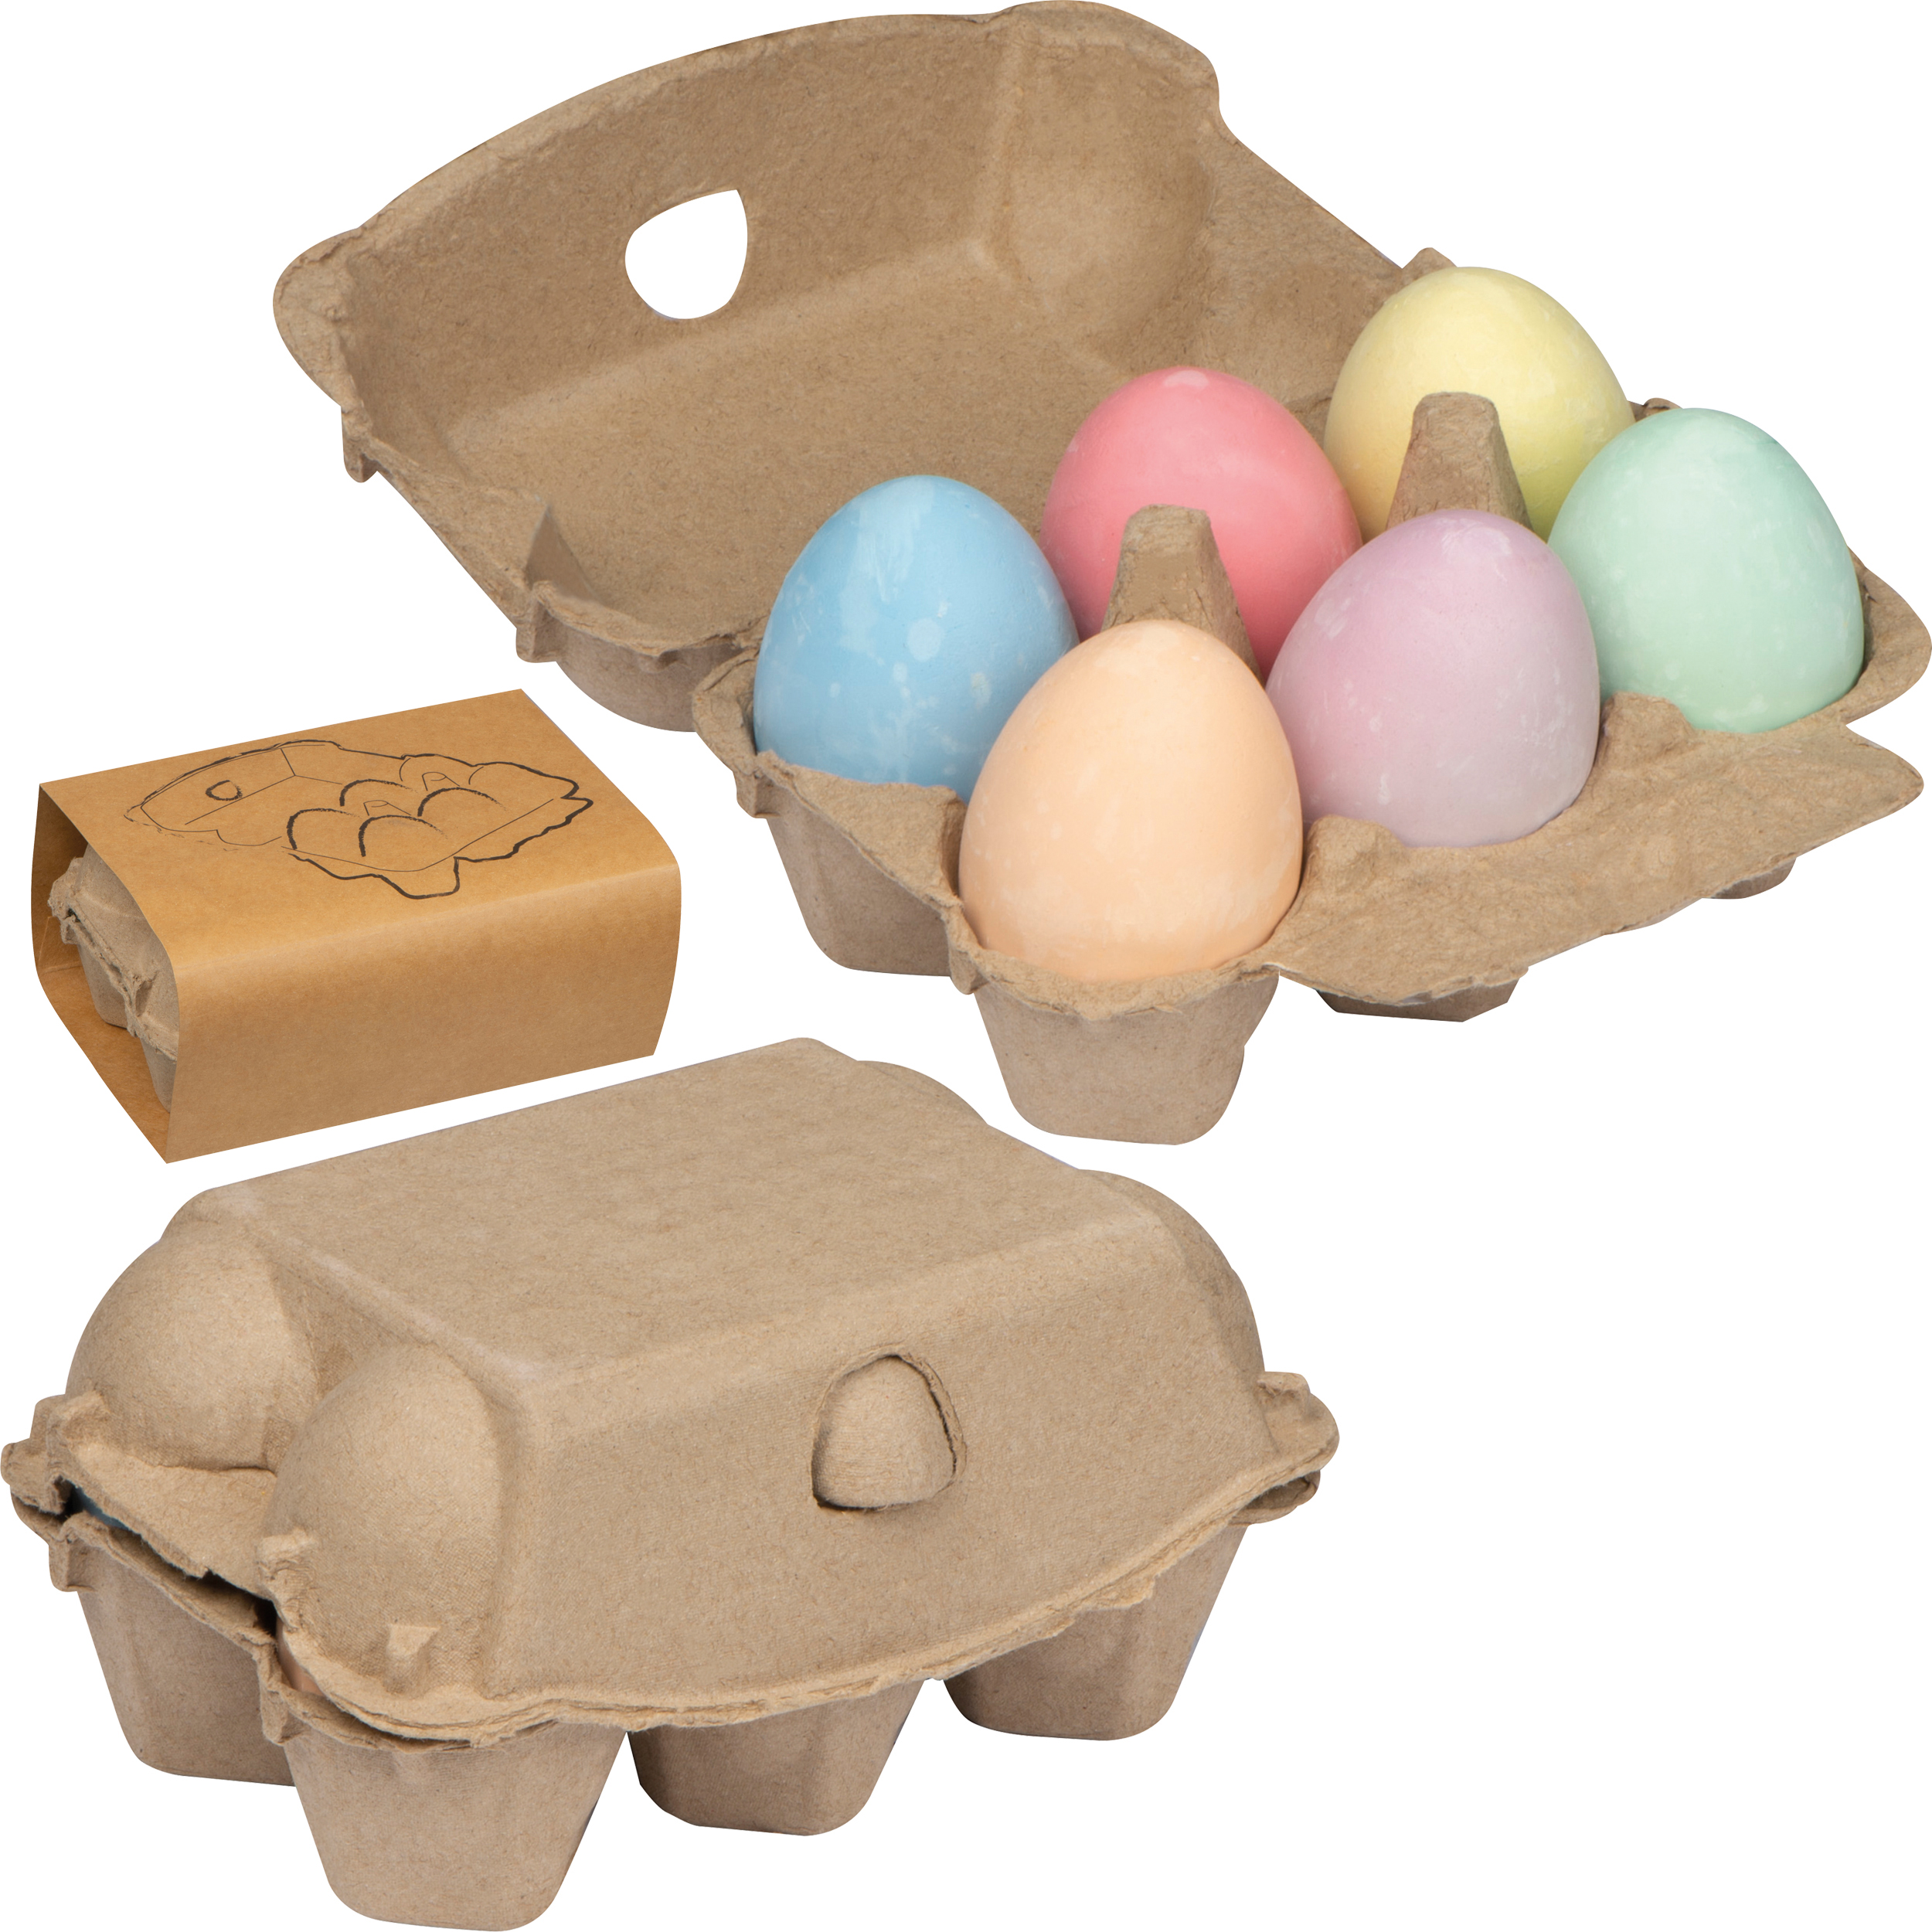 Chalk eggs in cardboard box